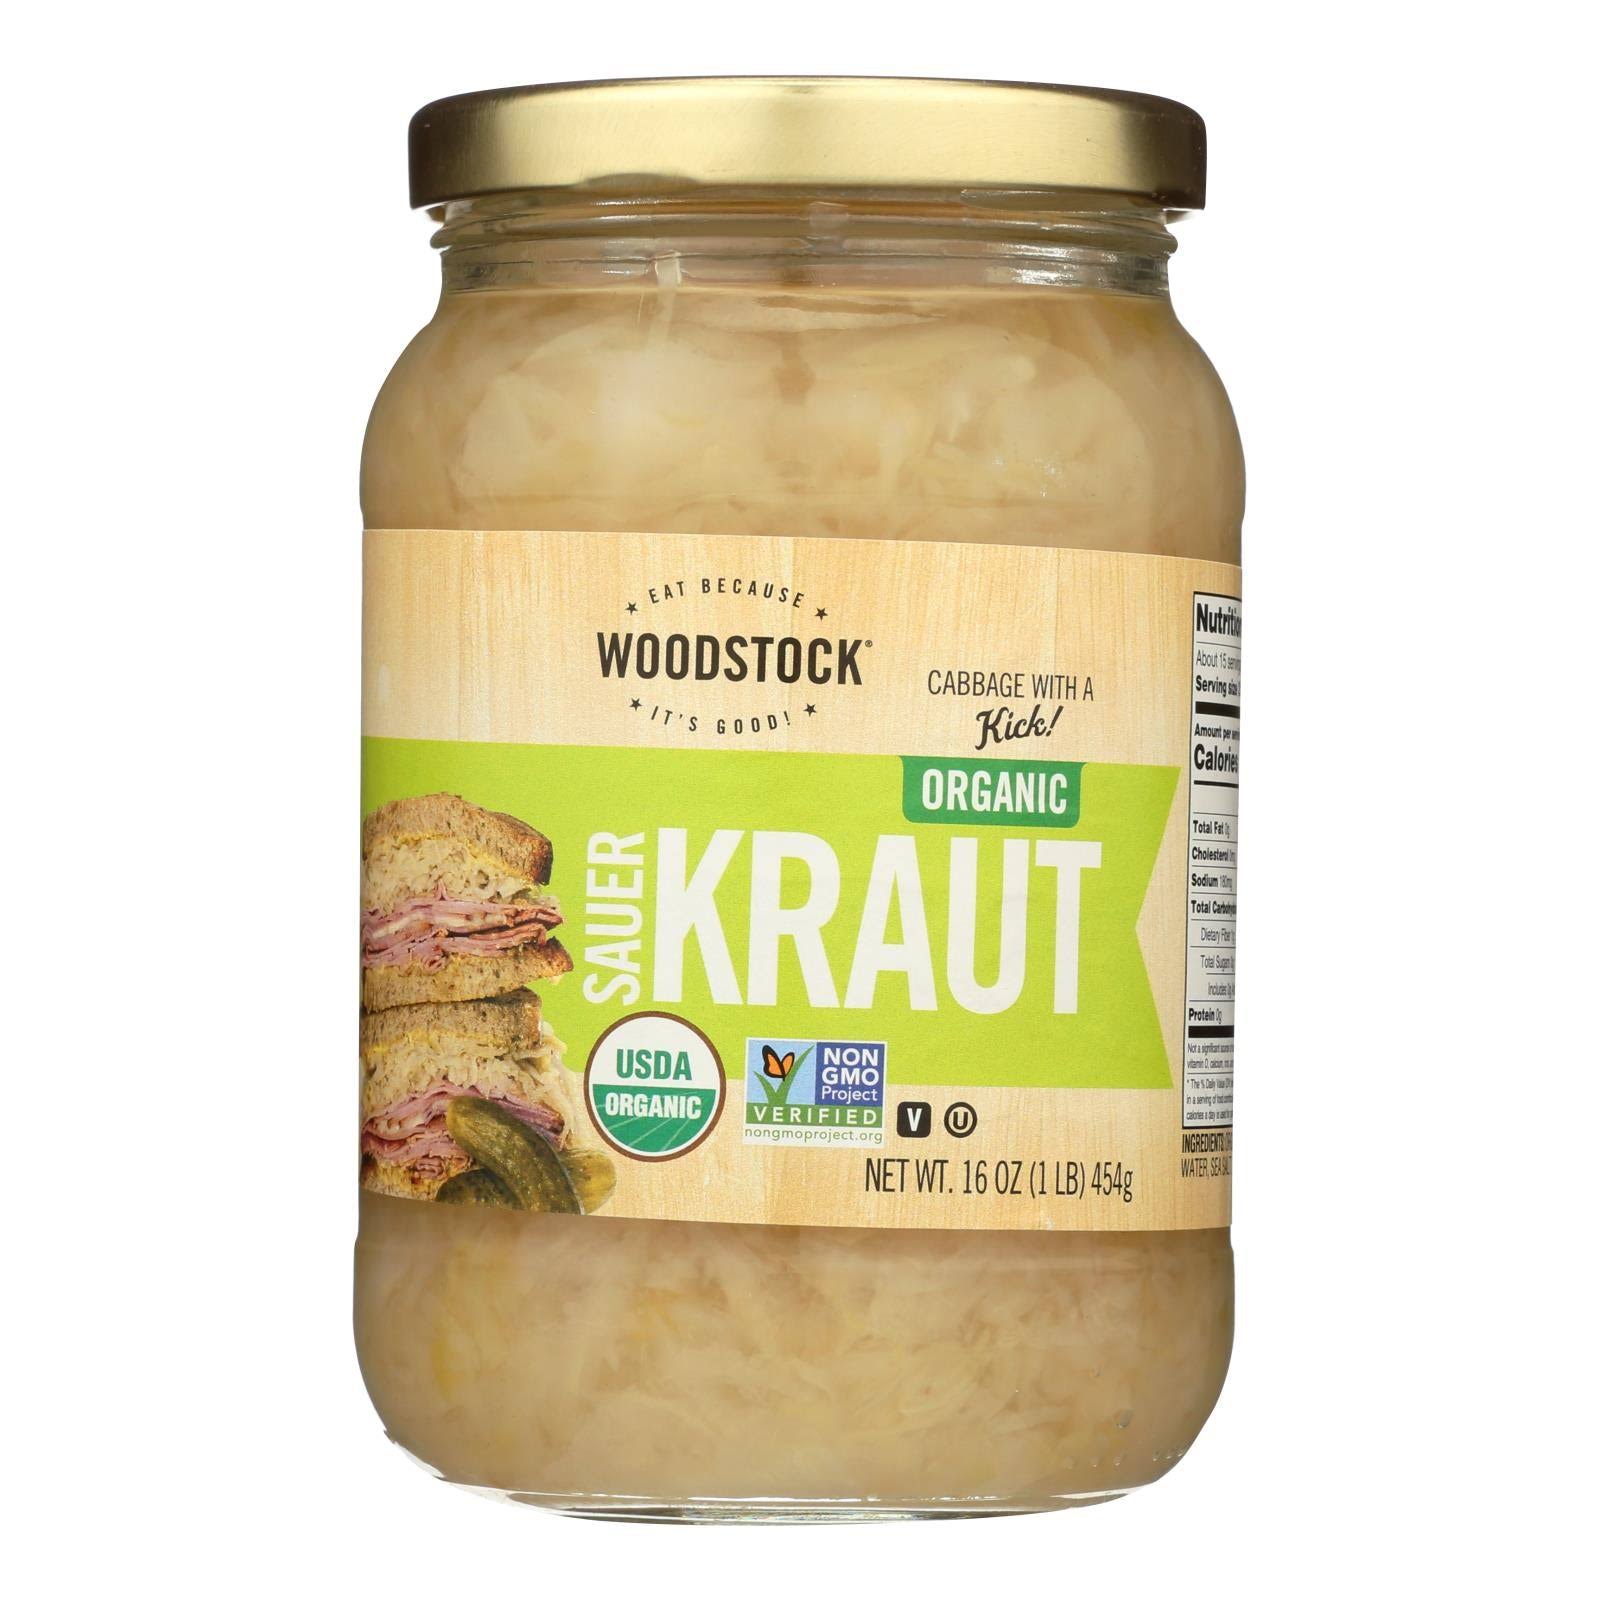 Woodstock Organic Sauerkraut - Case of 12 - 16 oz.